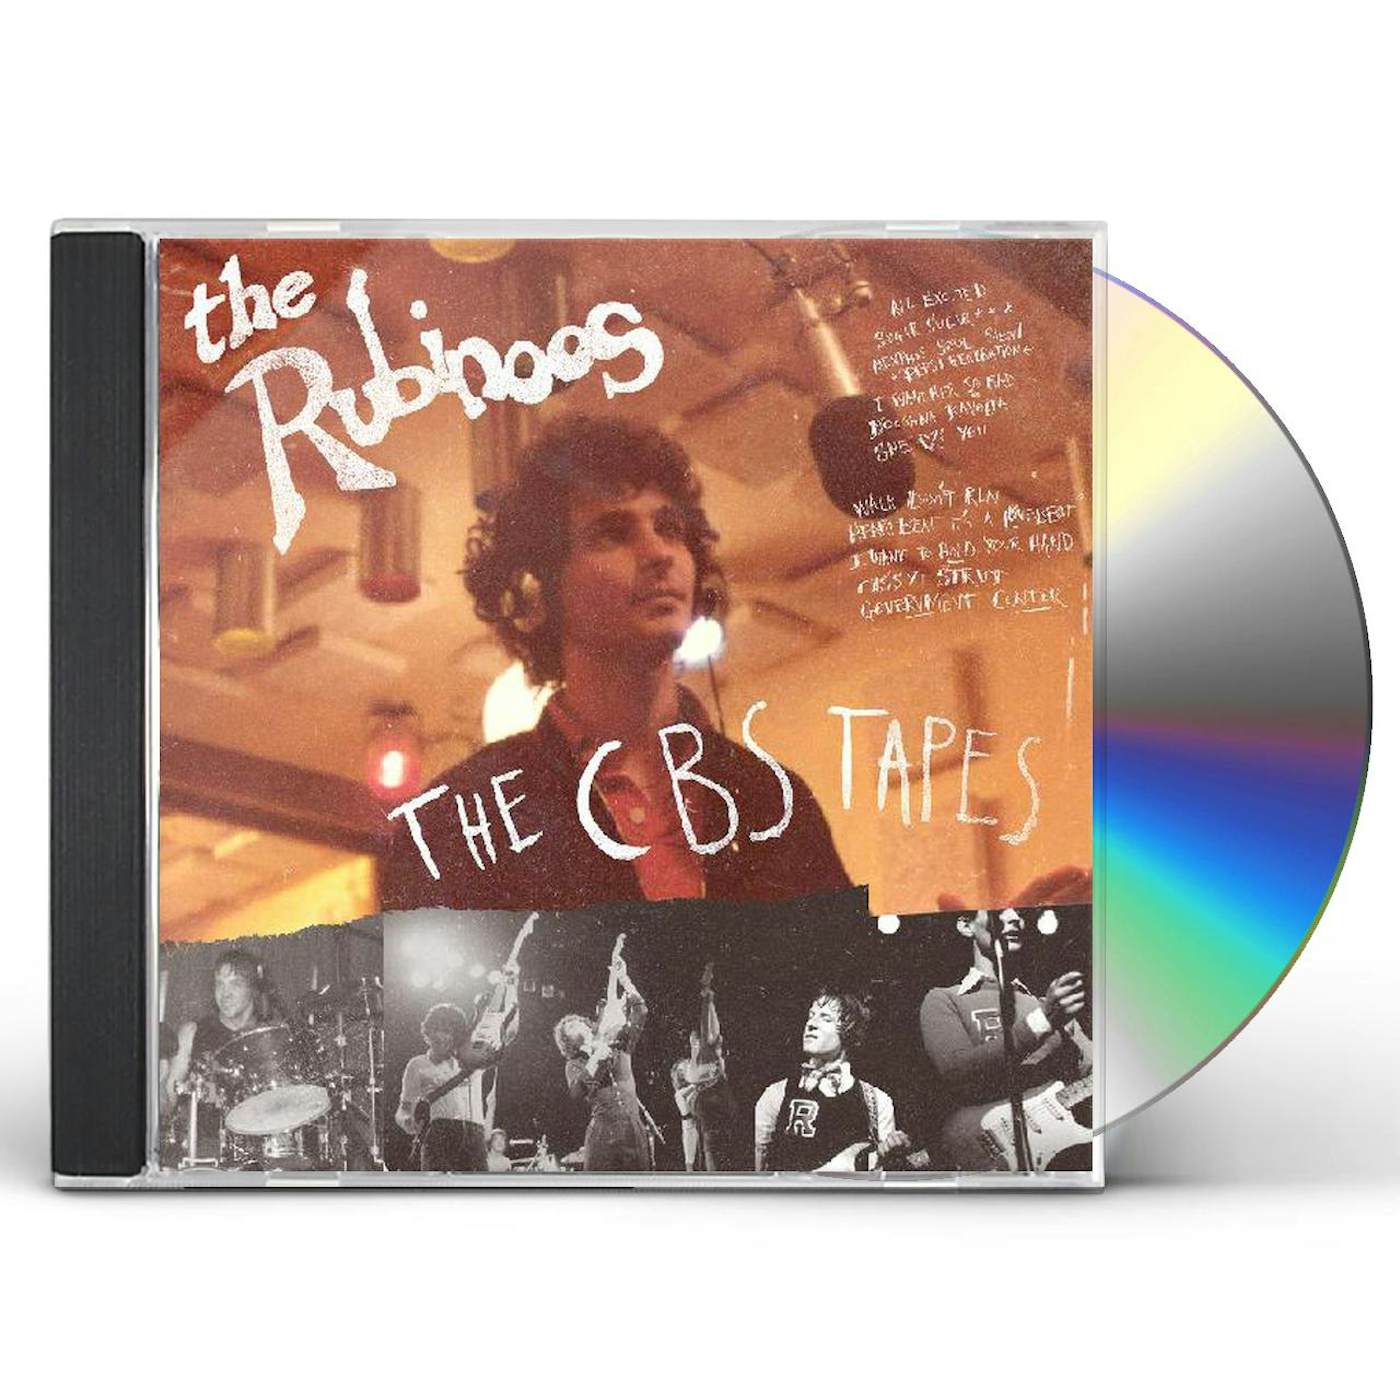 The Rubinoos CBS TAPES CD